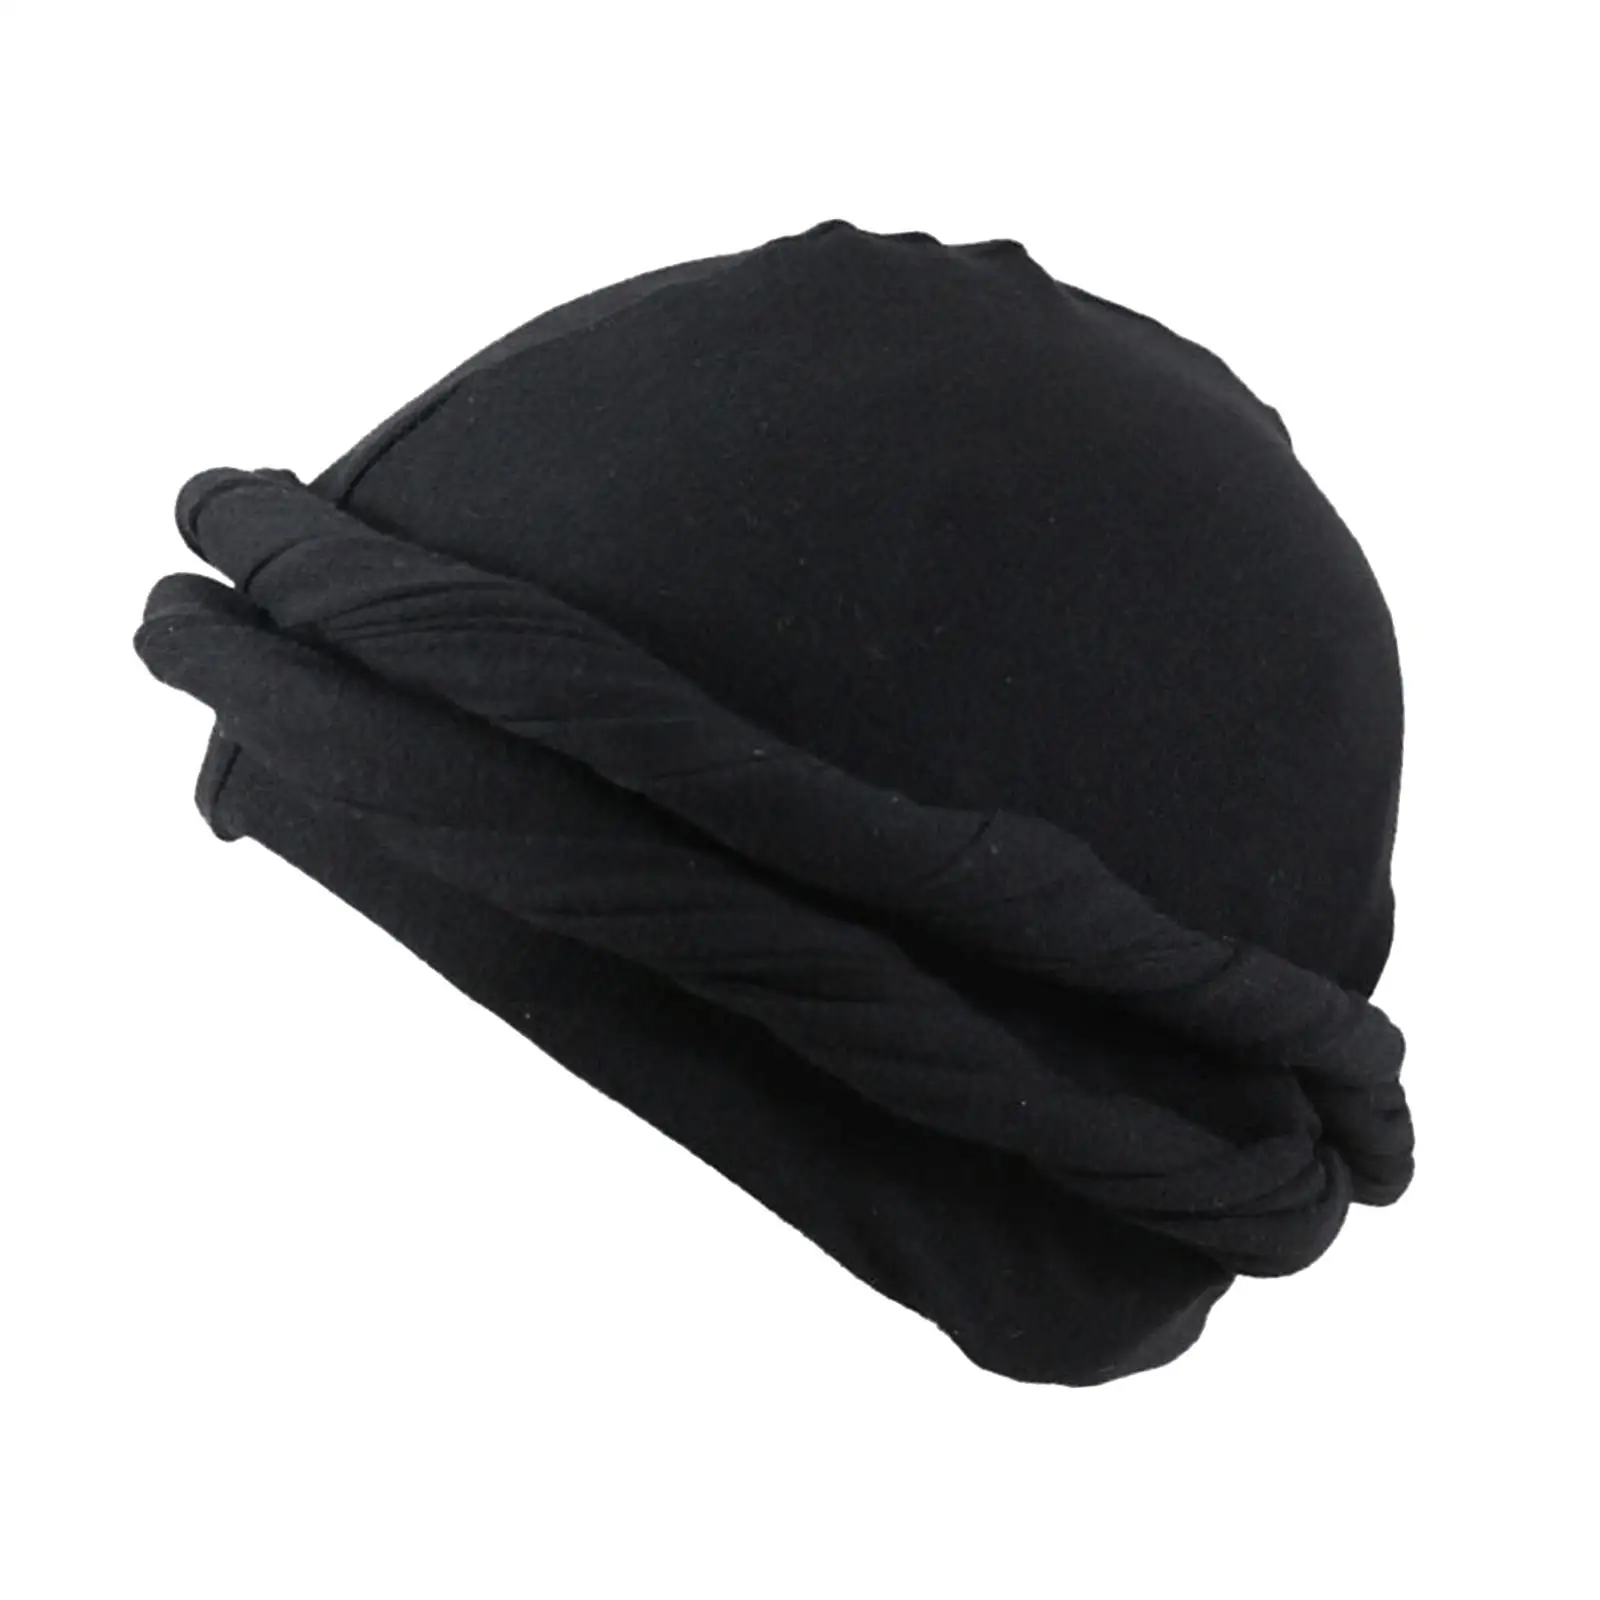 Stretchy Beanie Headscarf Baggy Skull Cap Sleeping Hat Sports Cycling Cap